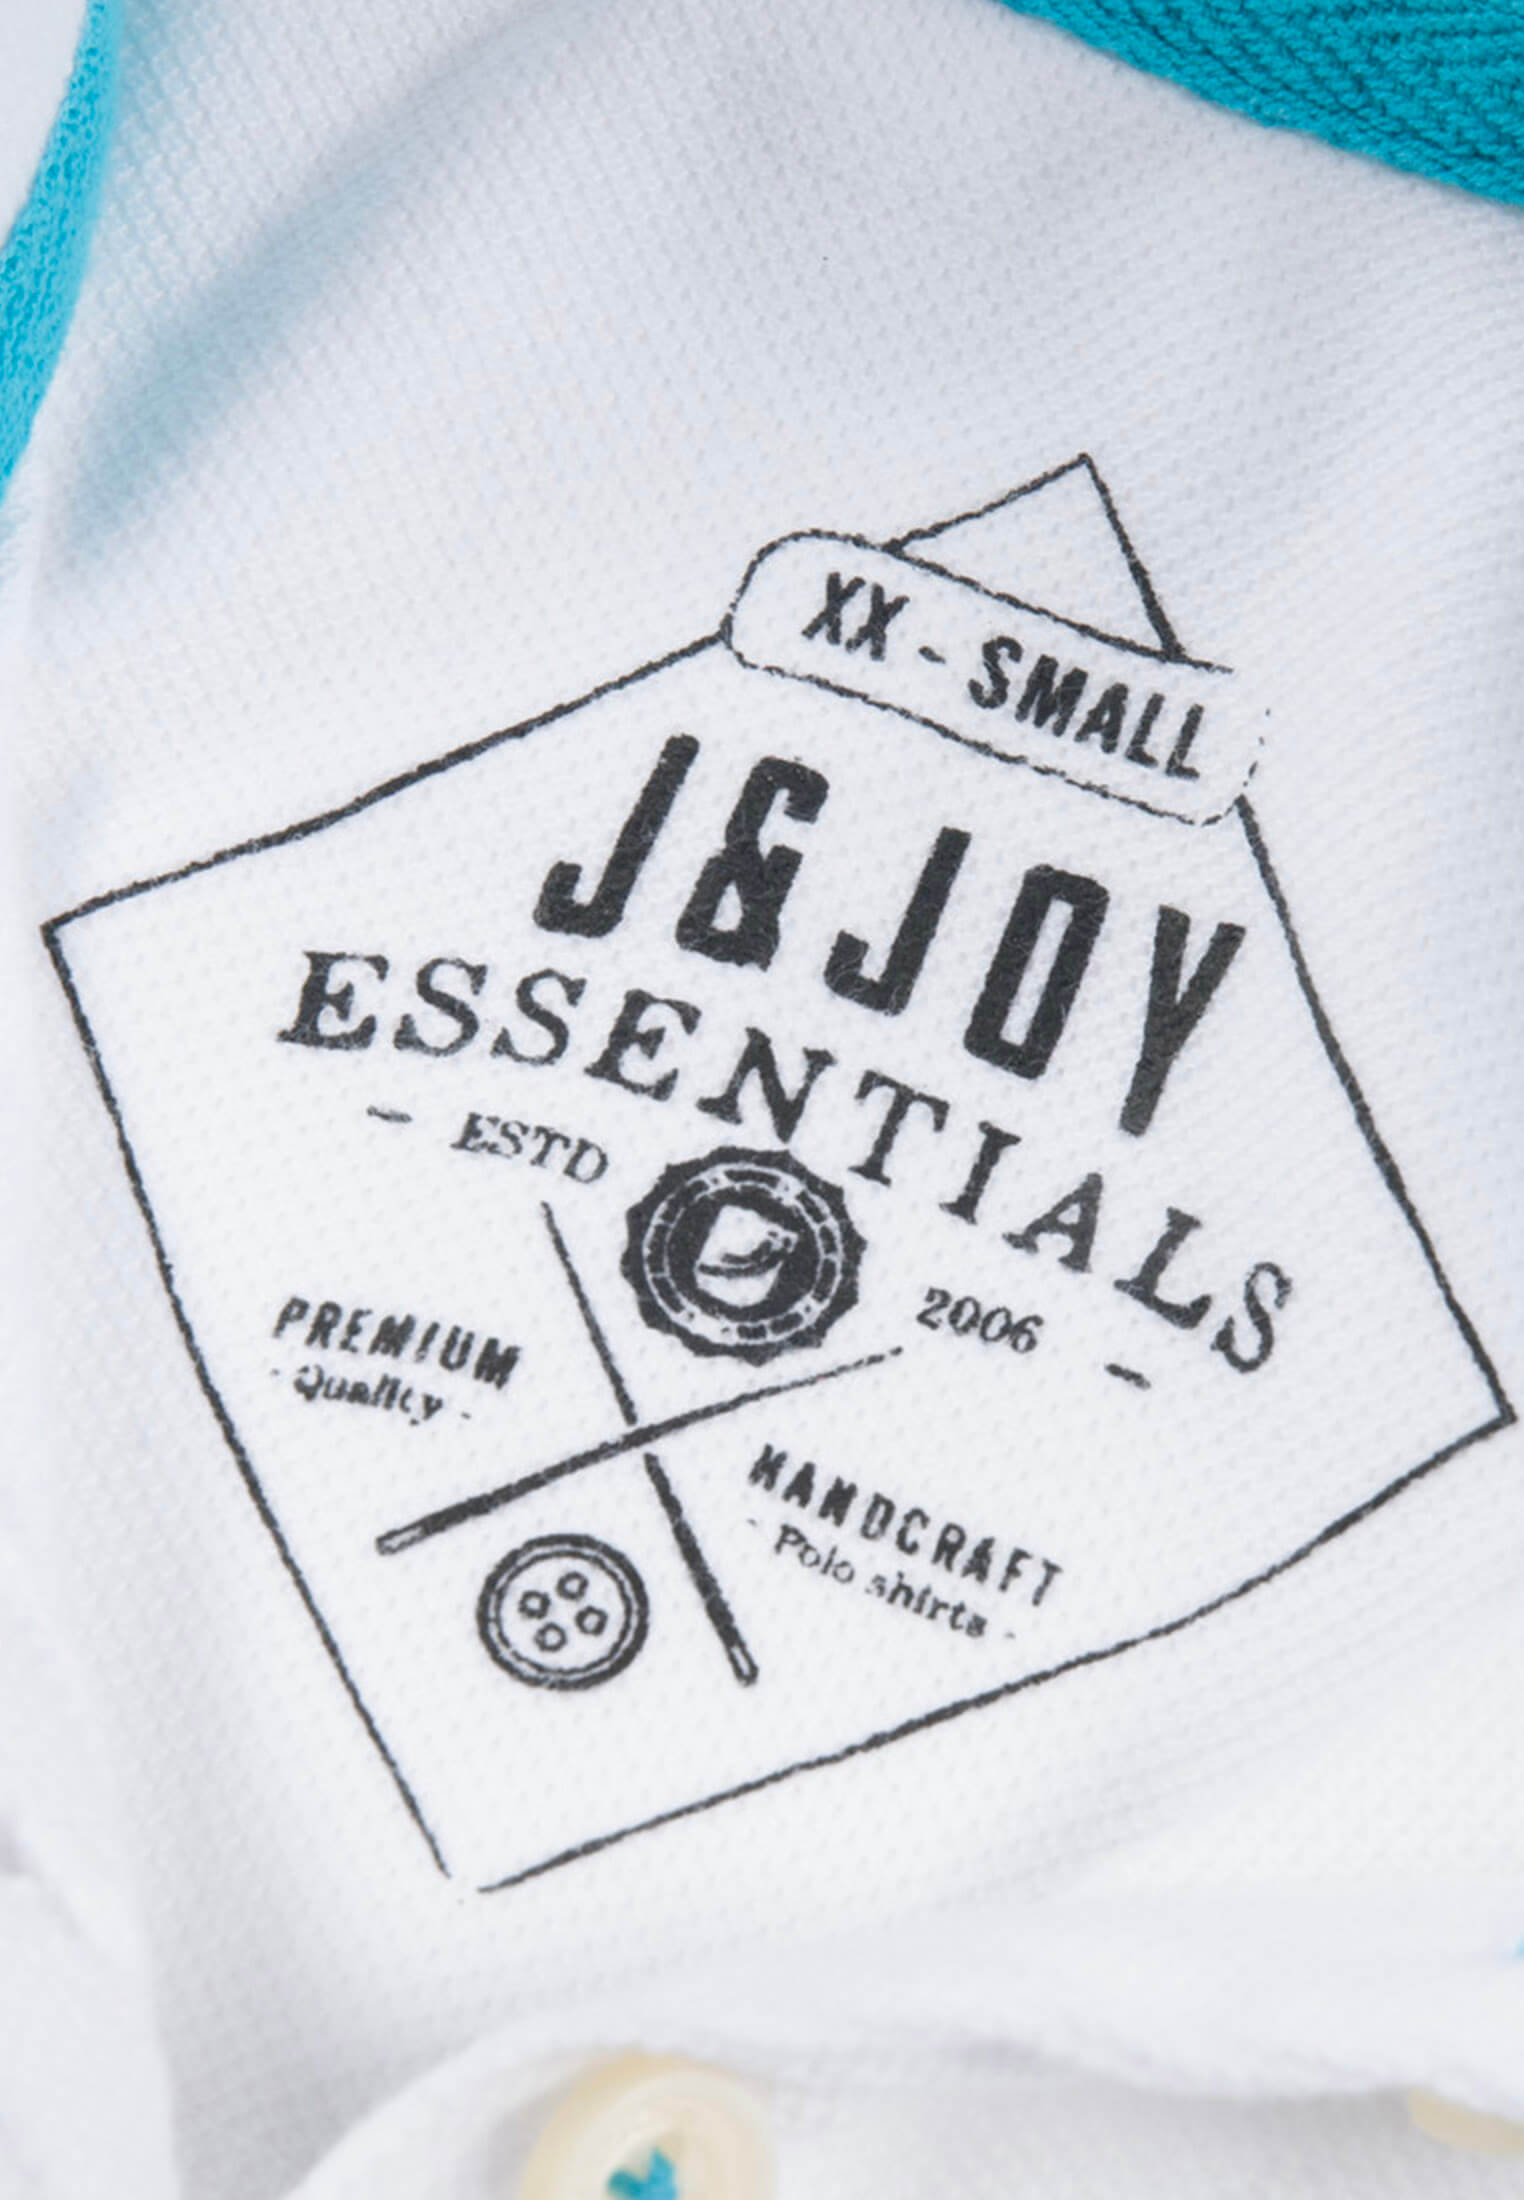 Polo Essentials Femme 08 White July | J&JOY.